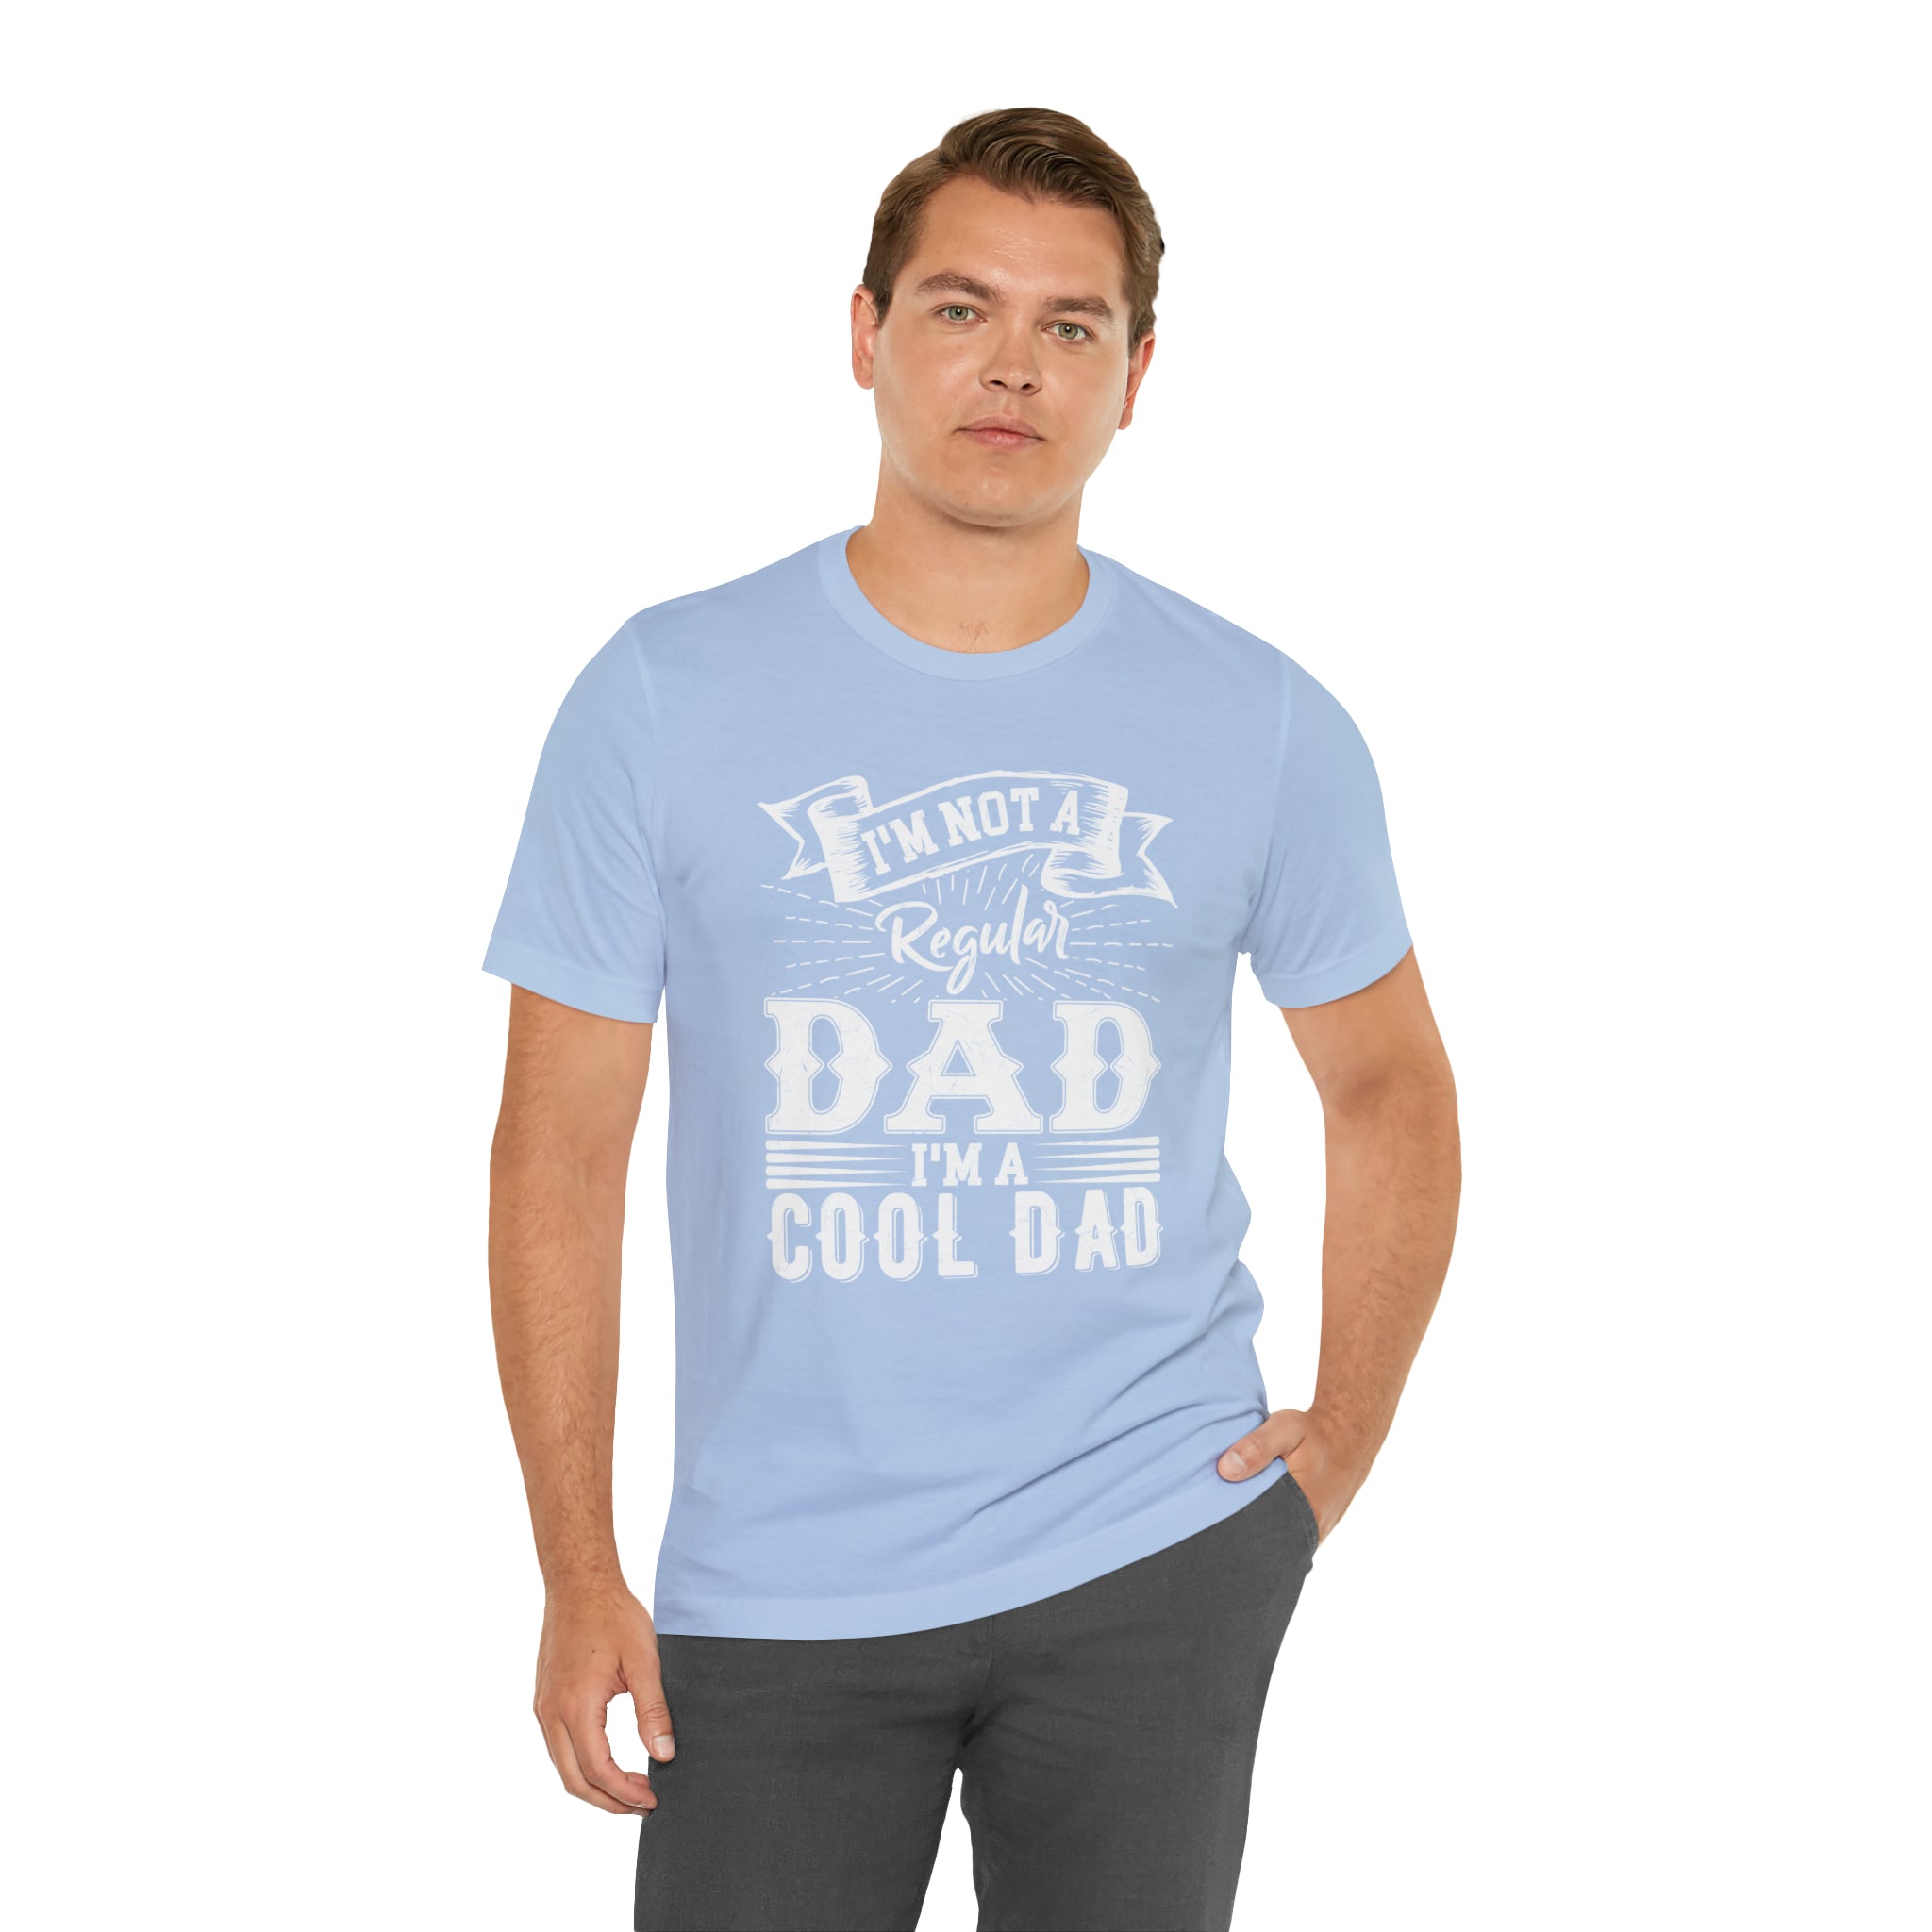 I'm Not A Regular Dad I'm A Cool Dad